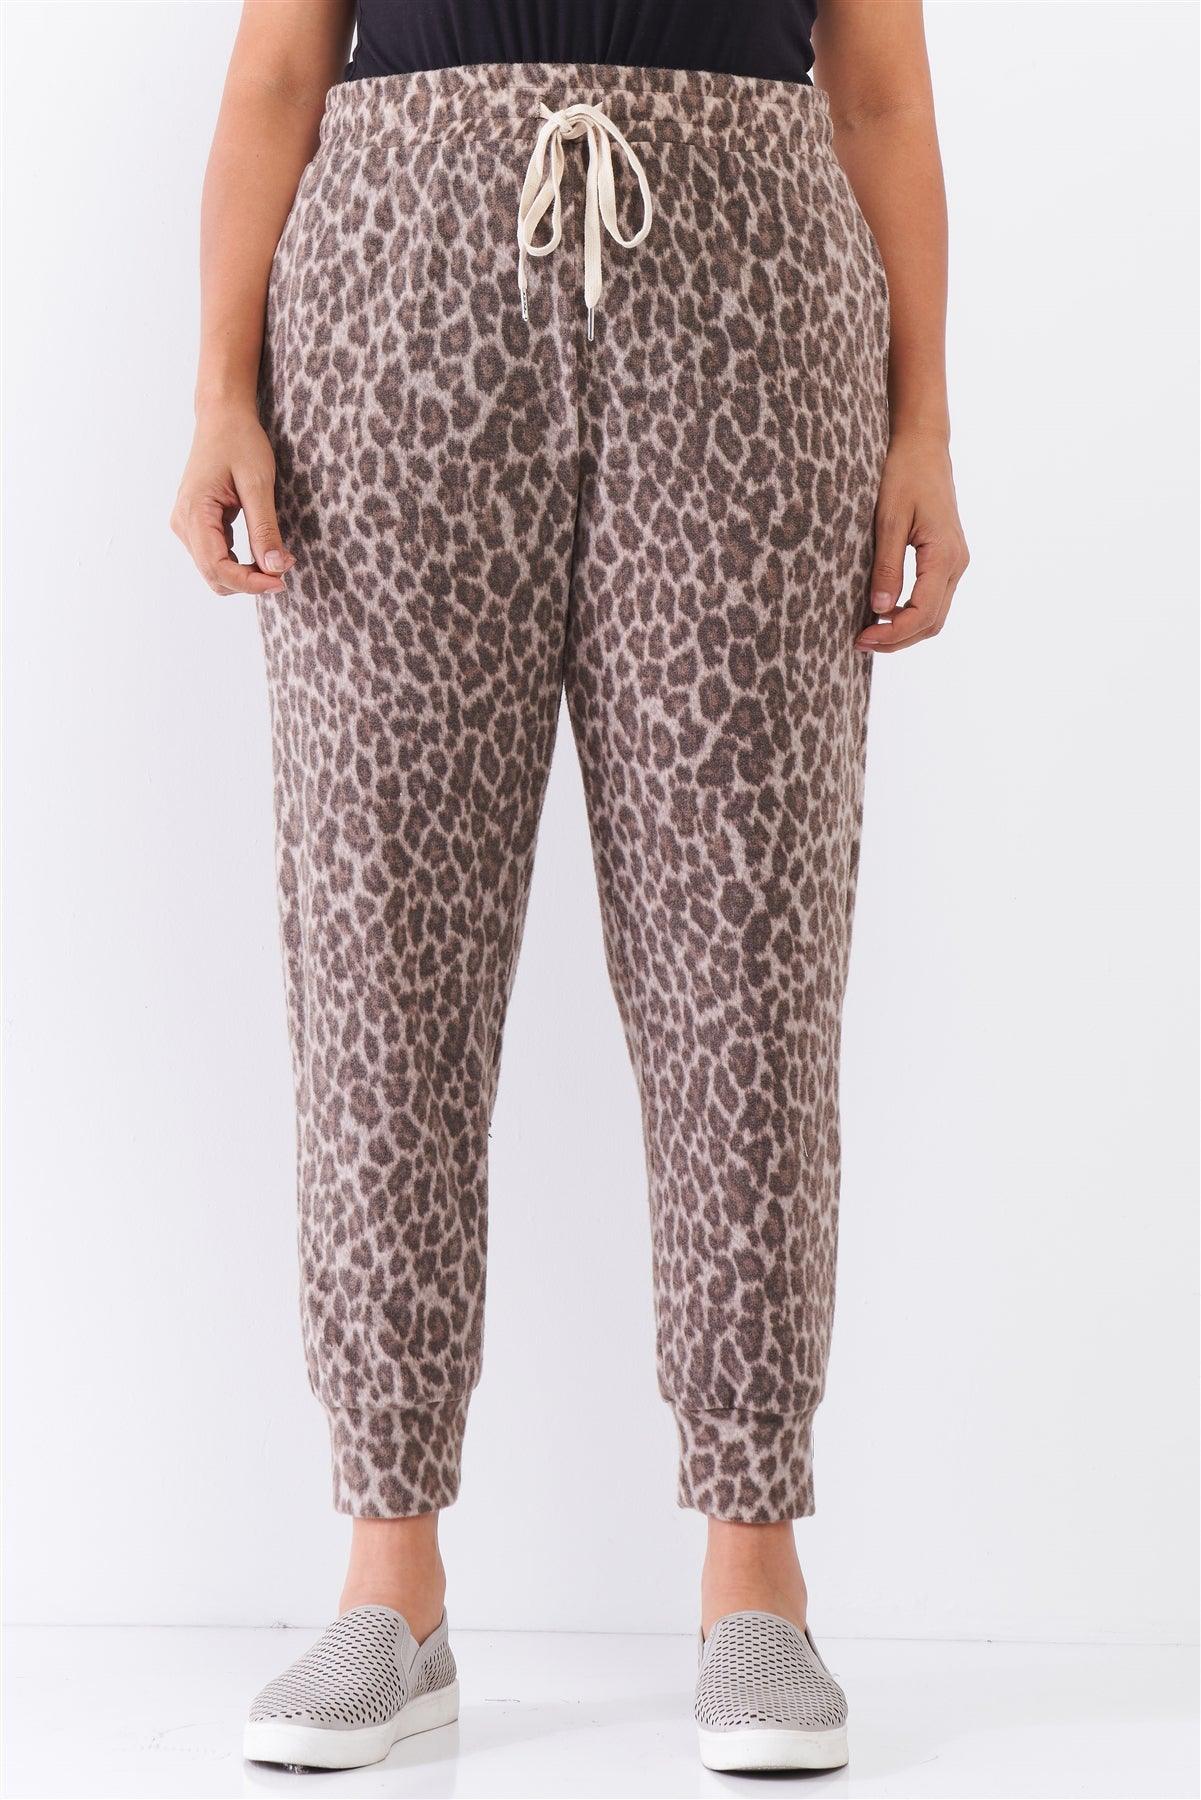 Taupe Brown Leopard Print Self-Tie High Waist Super Soft Lounge Pants /2-2-1